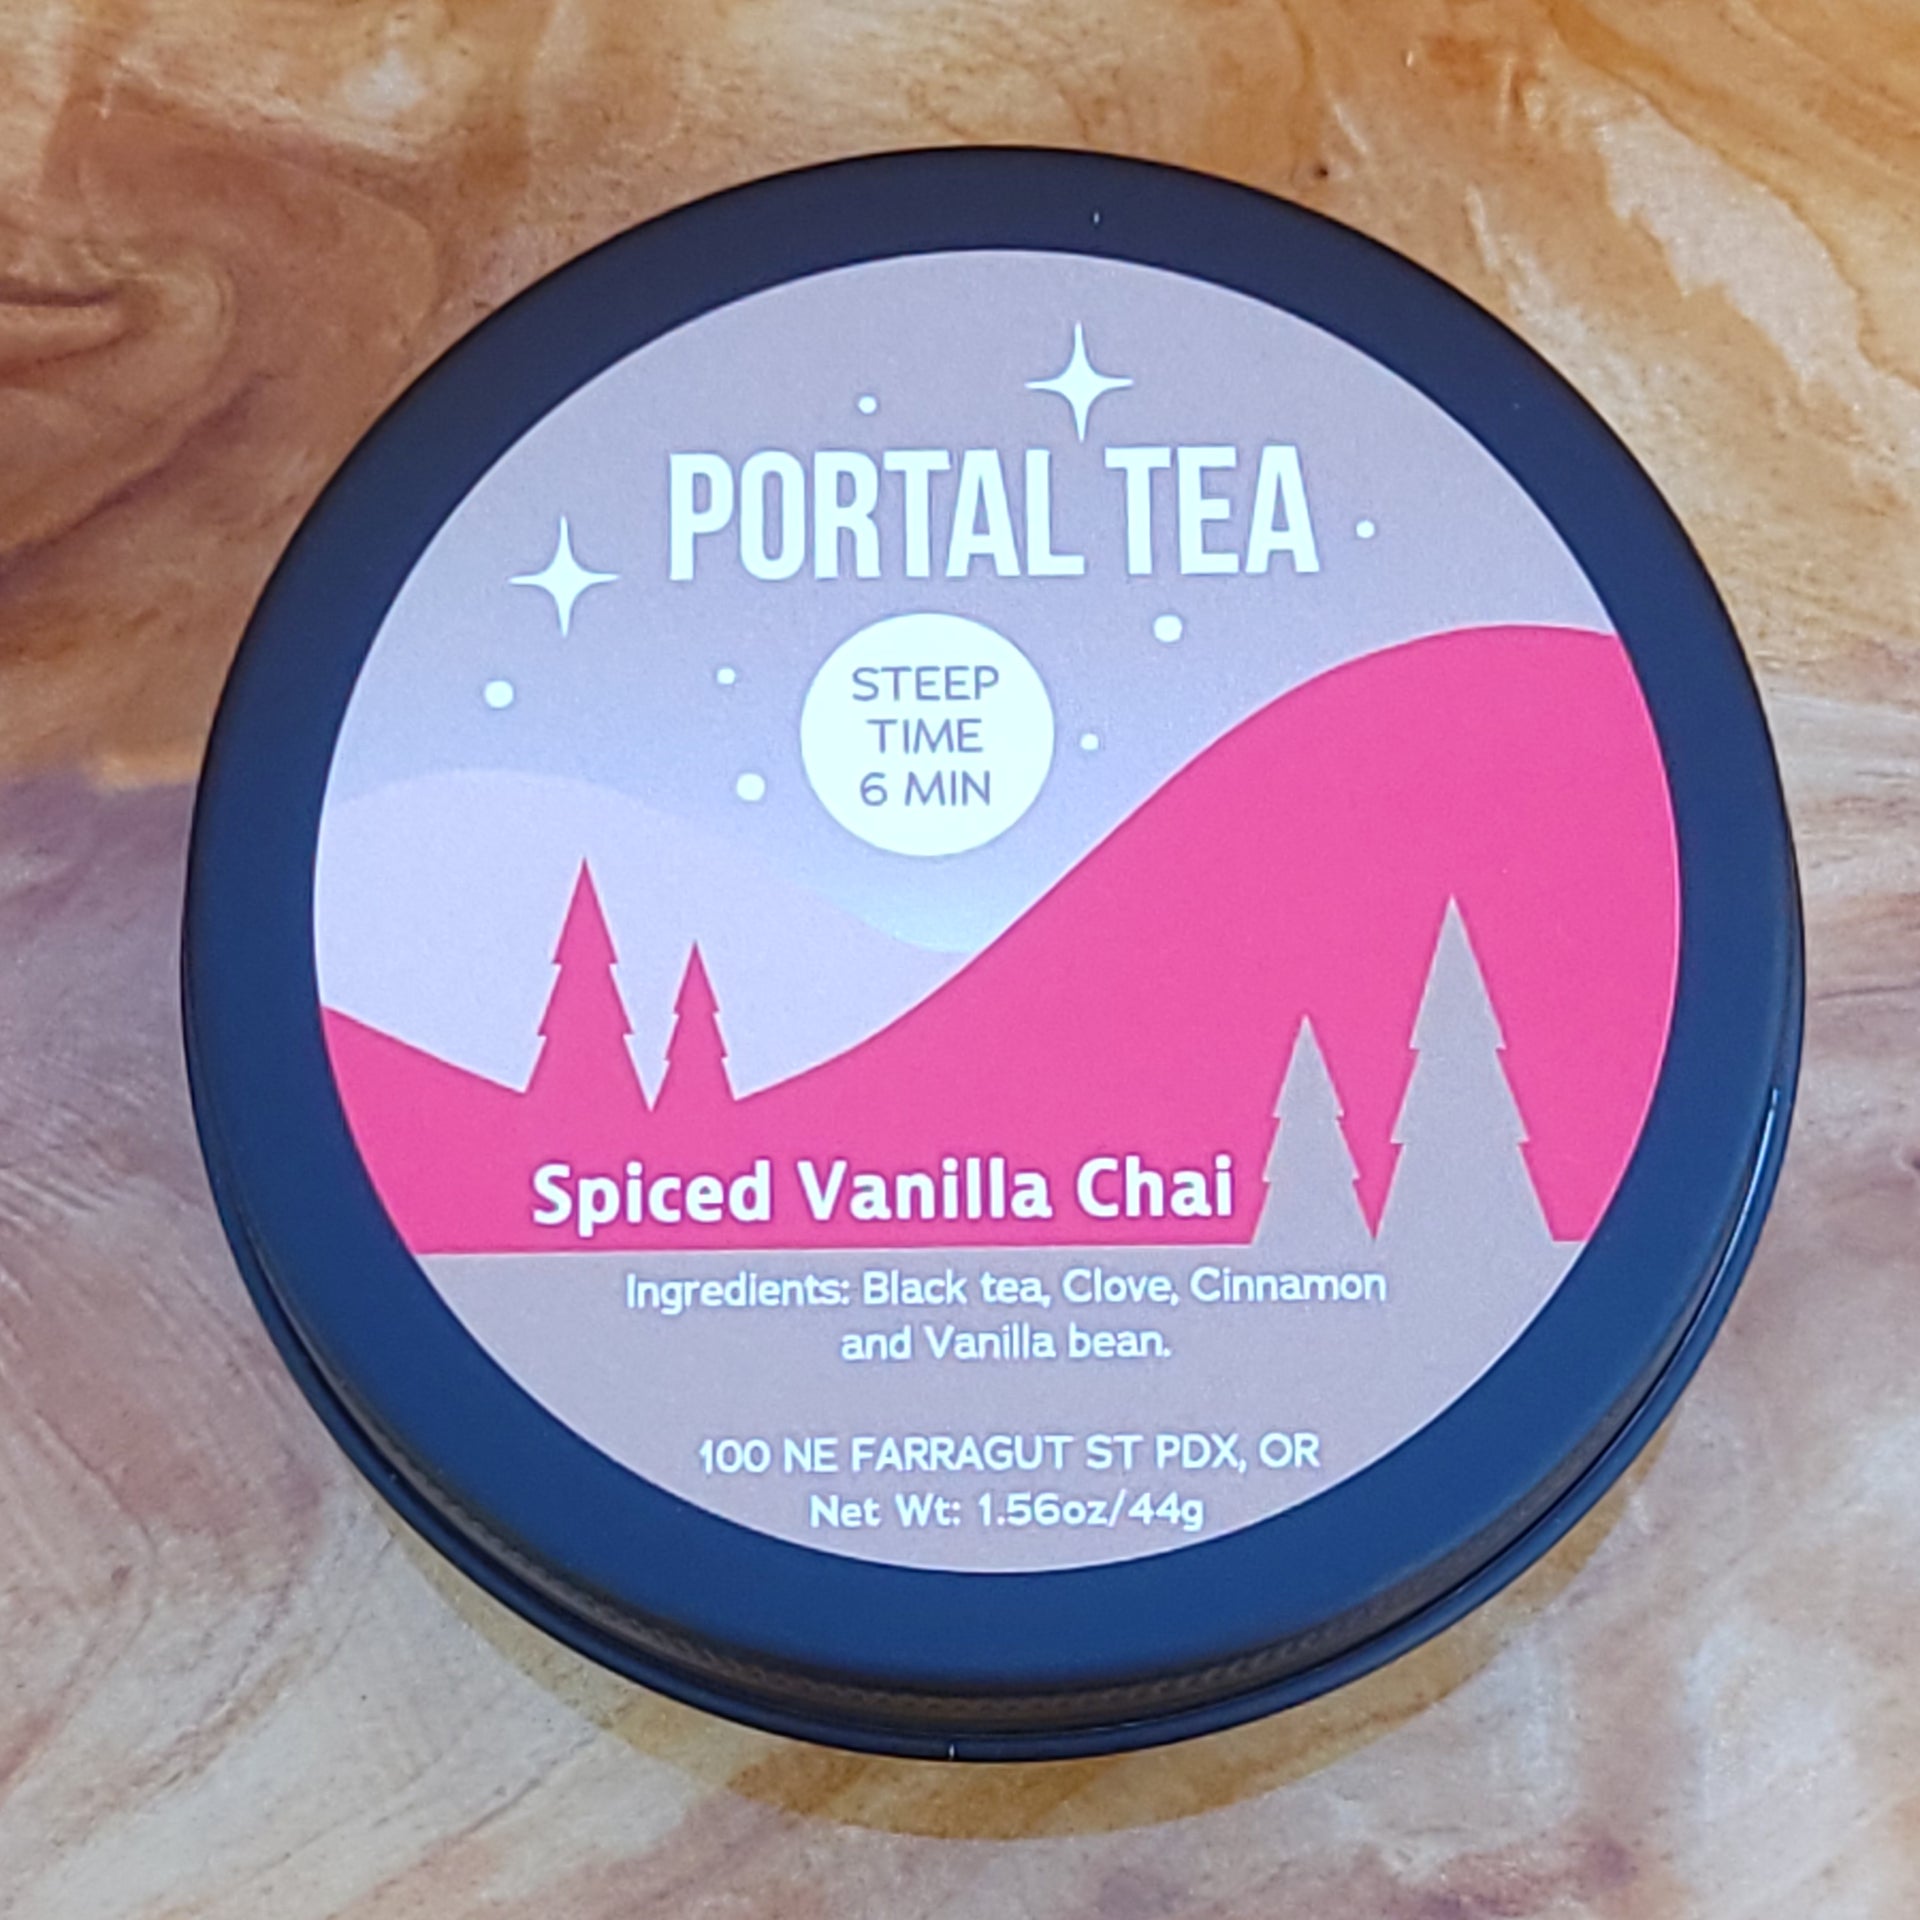 Premium Photo  Chai iced tea